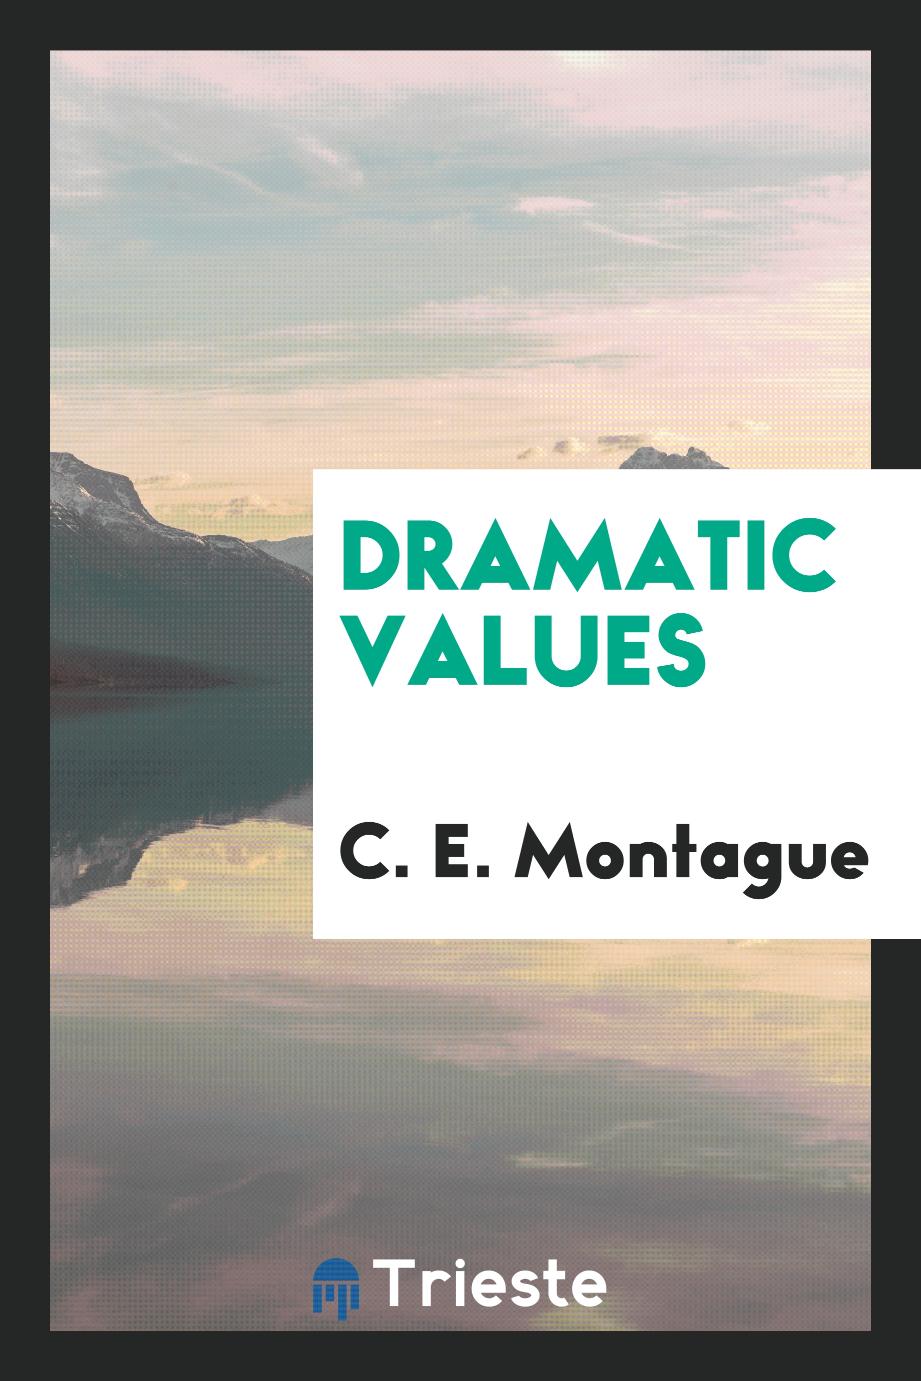 Dramatic values